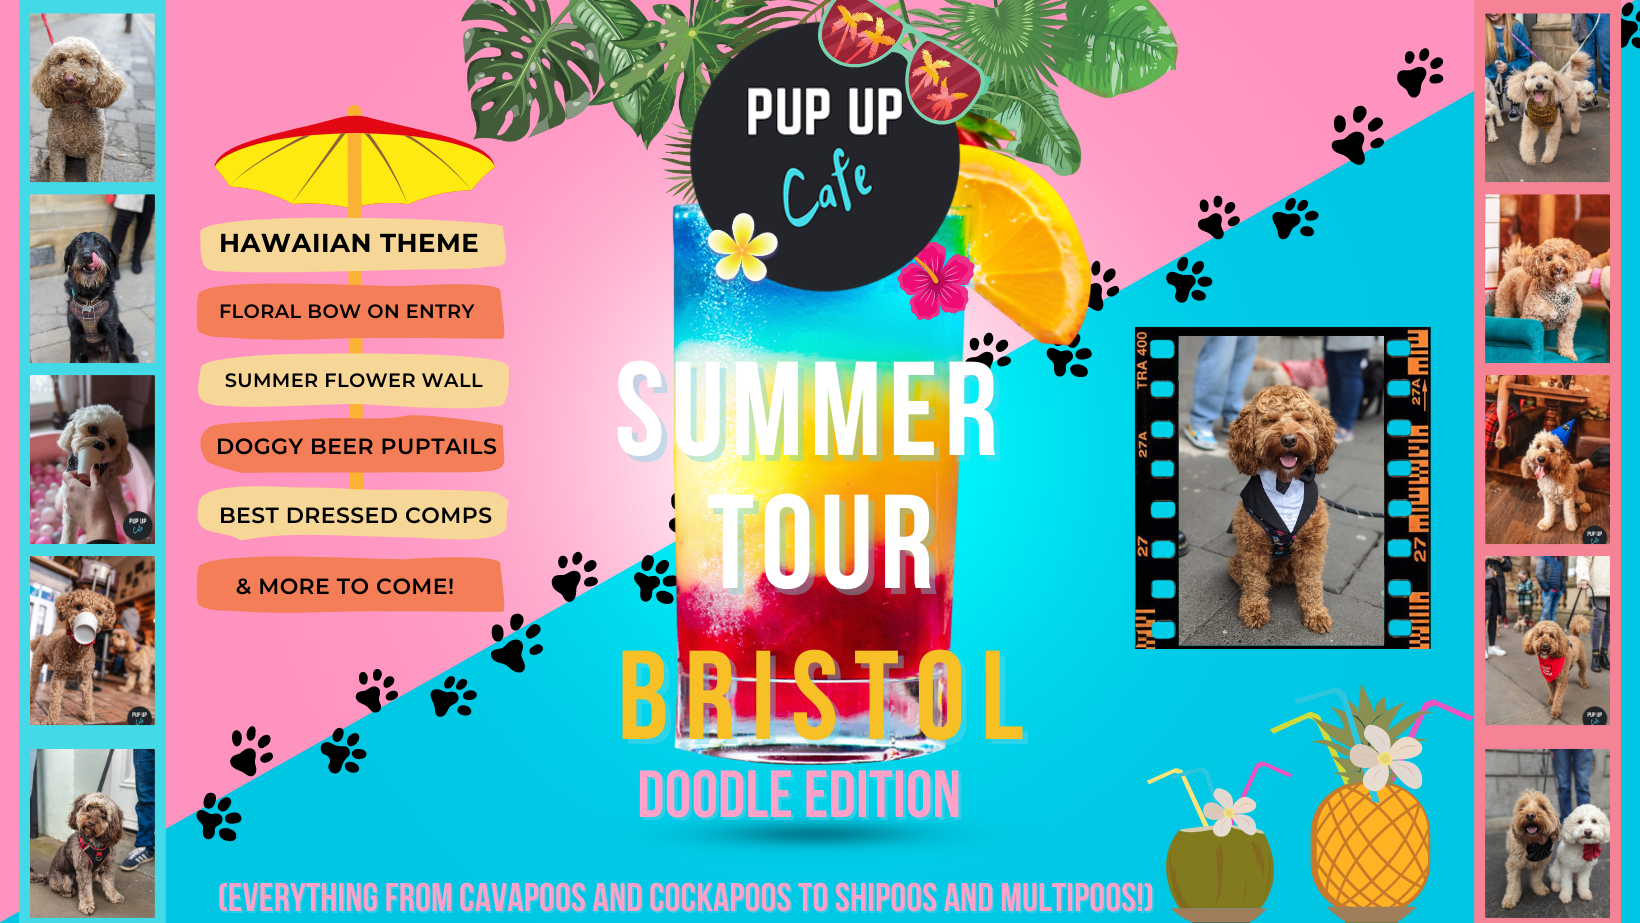 Doodle Pup Up Cafe – Bristol | SUMMER TOUR! 🌞